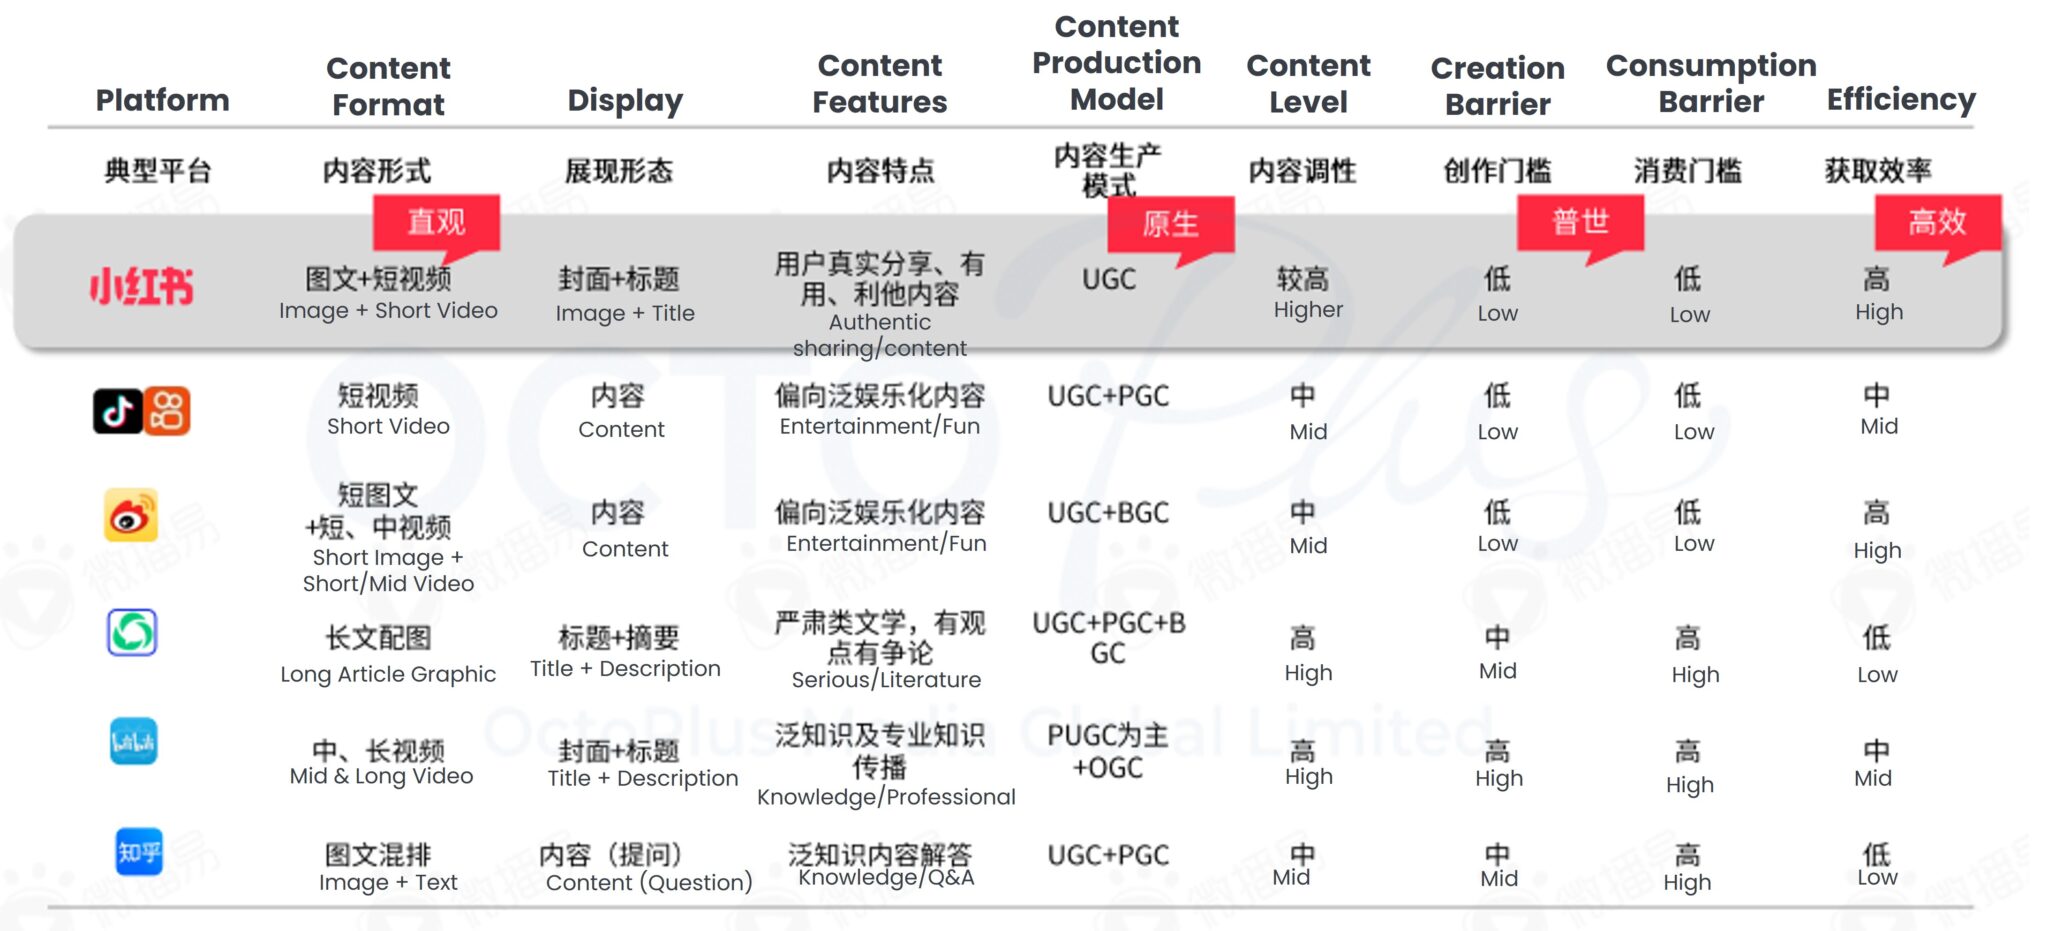 AsiaPac_xhs-marketing-strategies-2023-comparisons-of-platforms.jpg